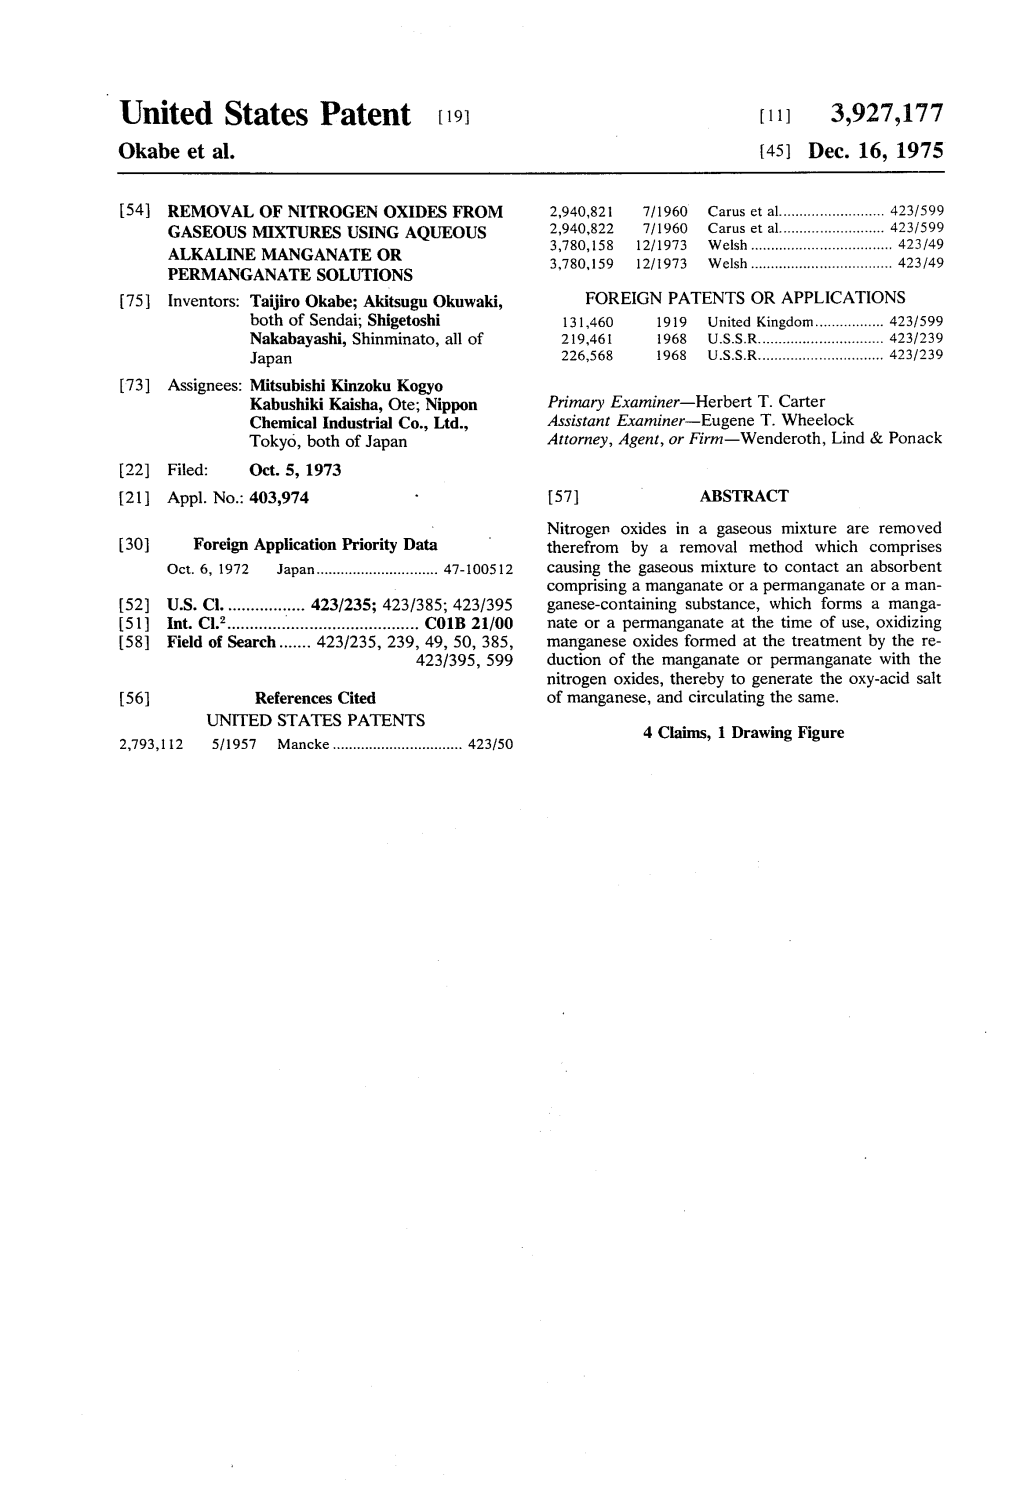 United States Patent (19) 11, 3,927,177 Okabe Et Al